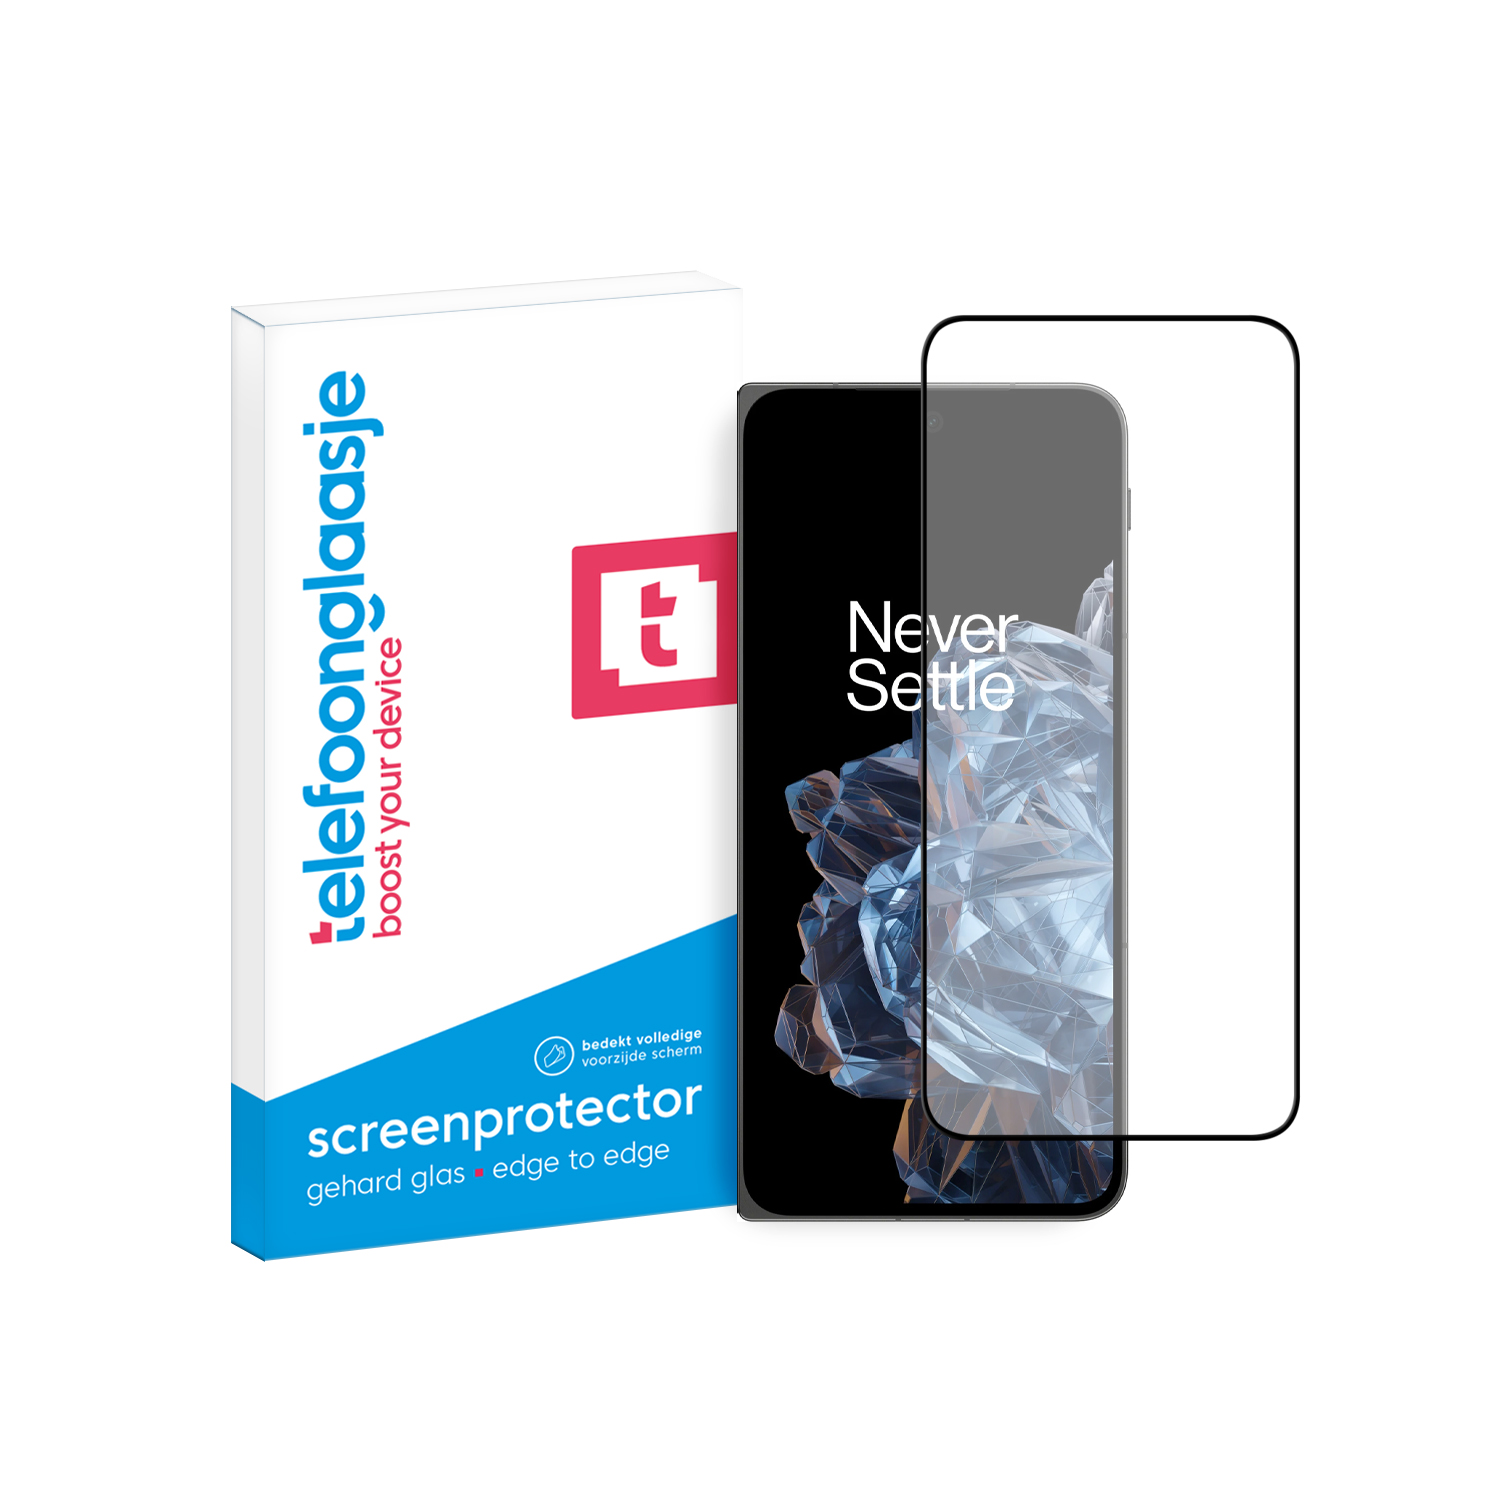 OnePlus Open screenprotector gehard glas Edge to Edge